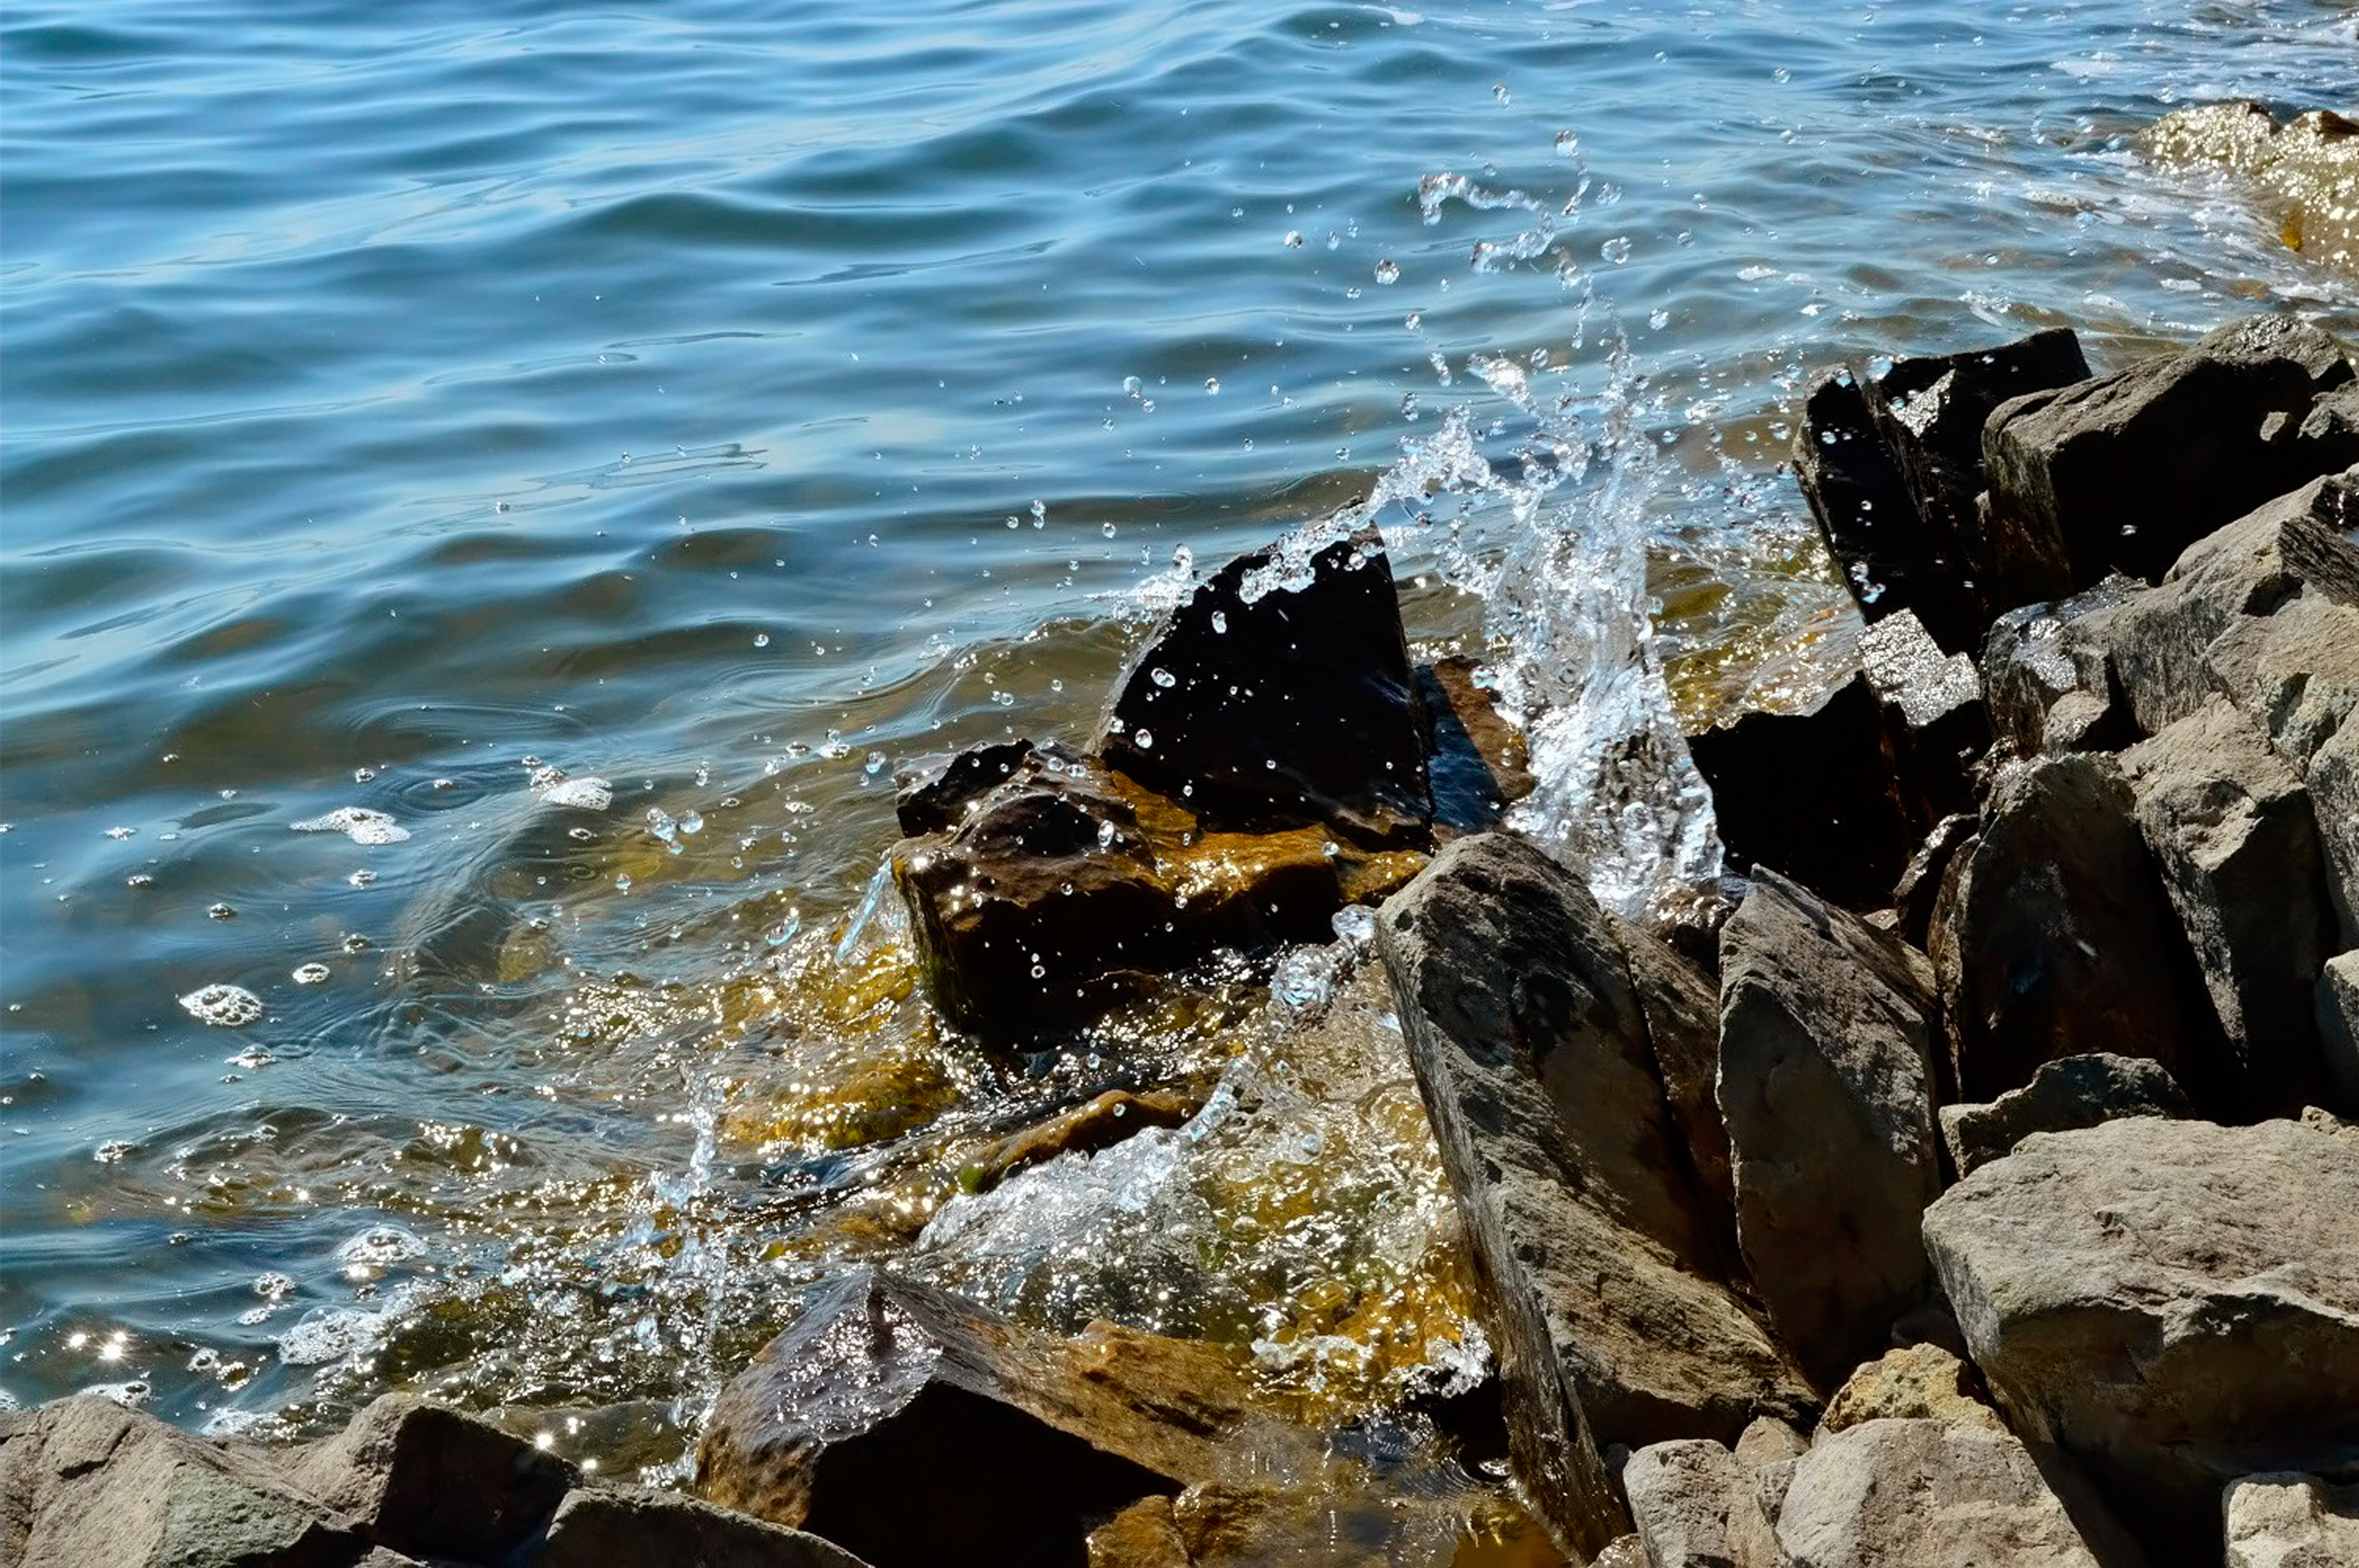 Пошла вода на камень. Камни в воде. Вода камень точит. Блики на воде. Море точит камни.